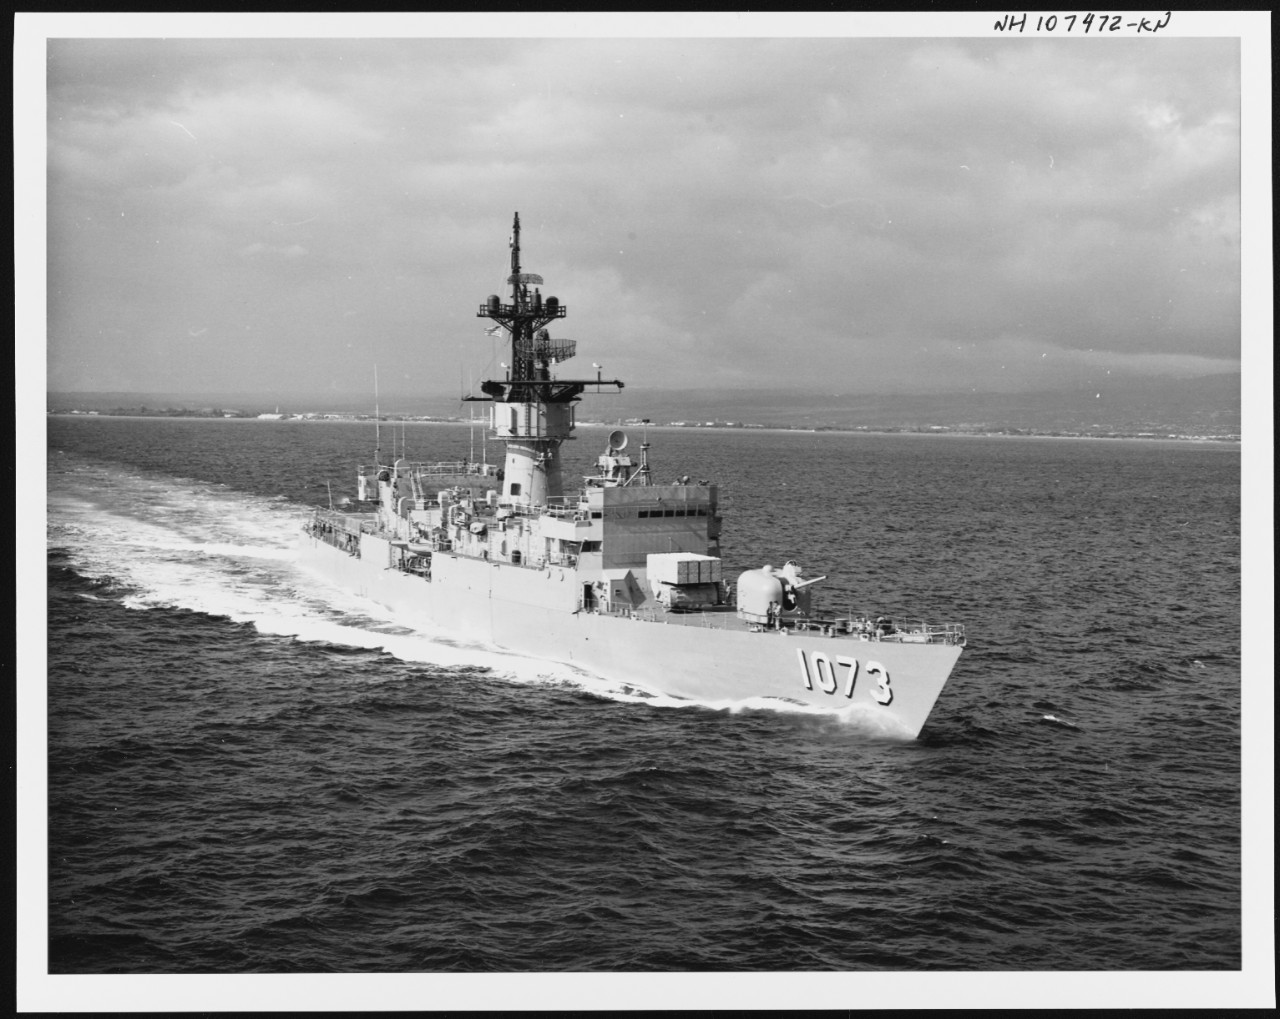 Photo #: NH 107472-KN USS Robert E. Peary